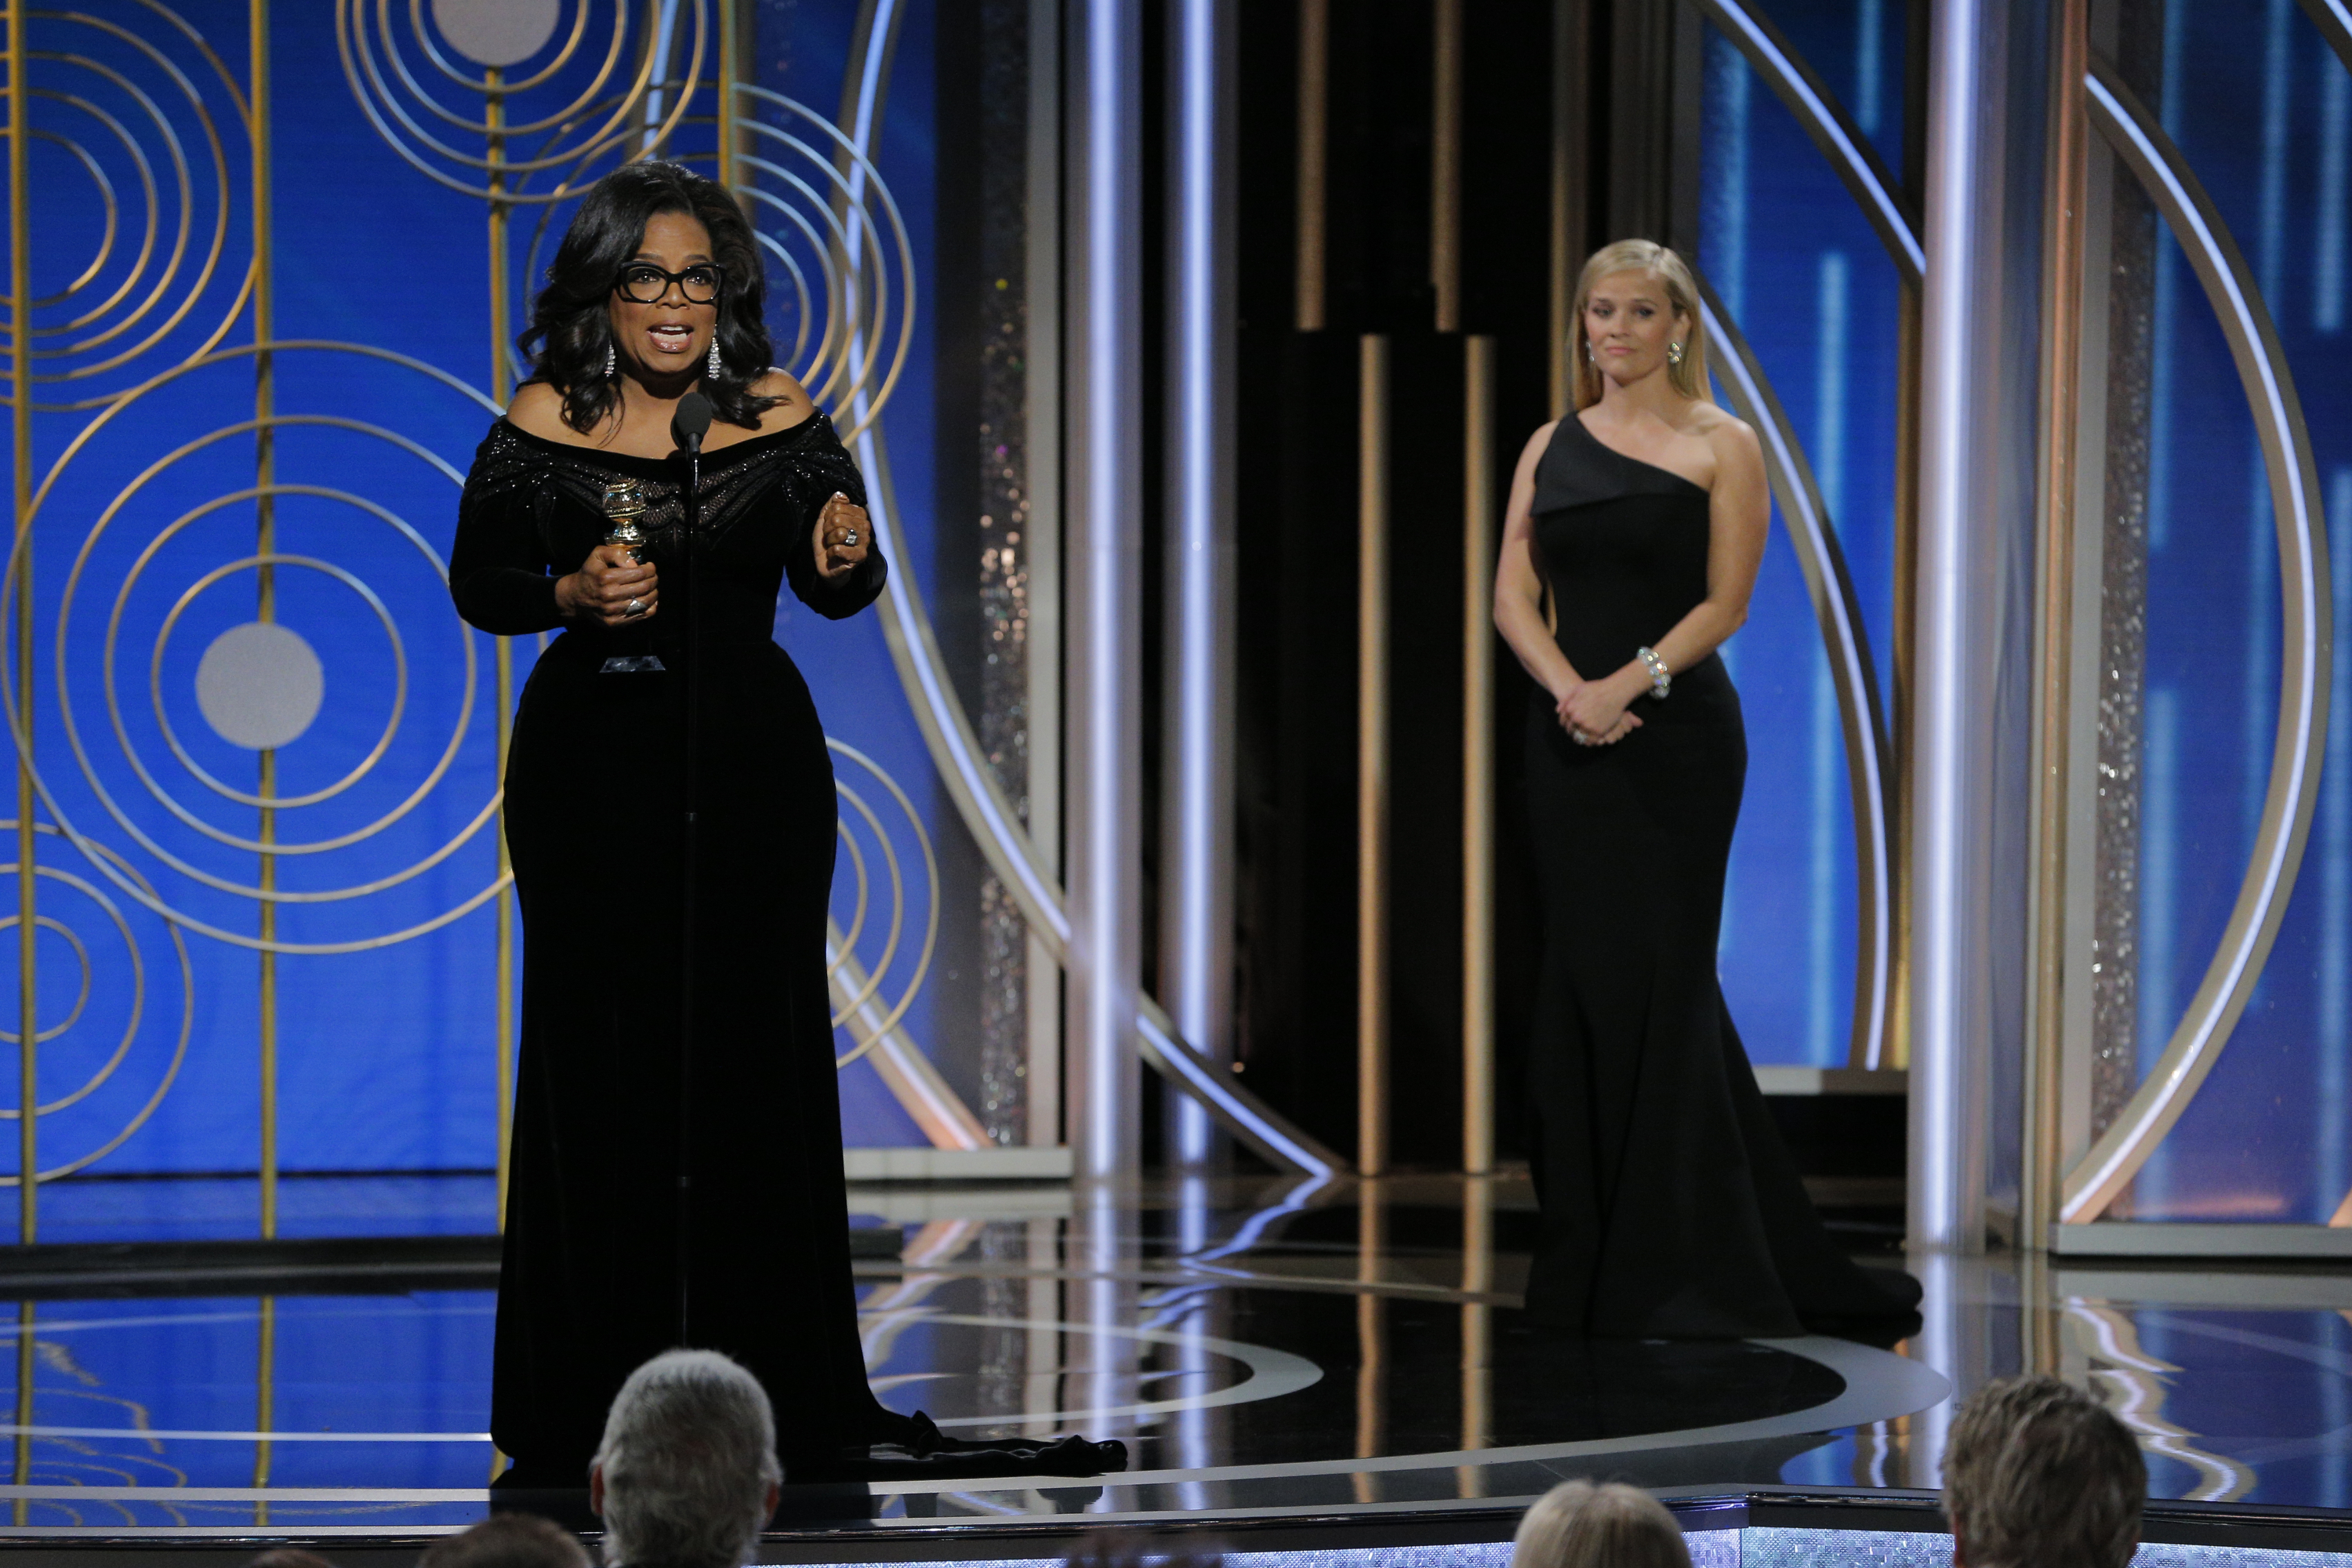 Oprah Winfrey on stage at the 2018 Golden Globes